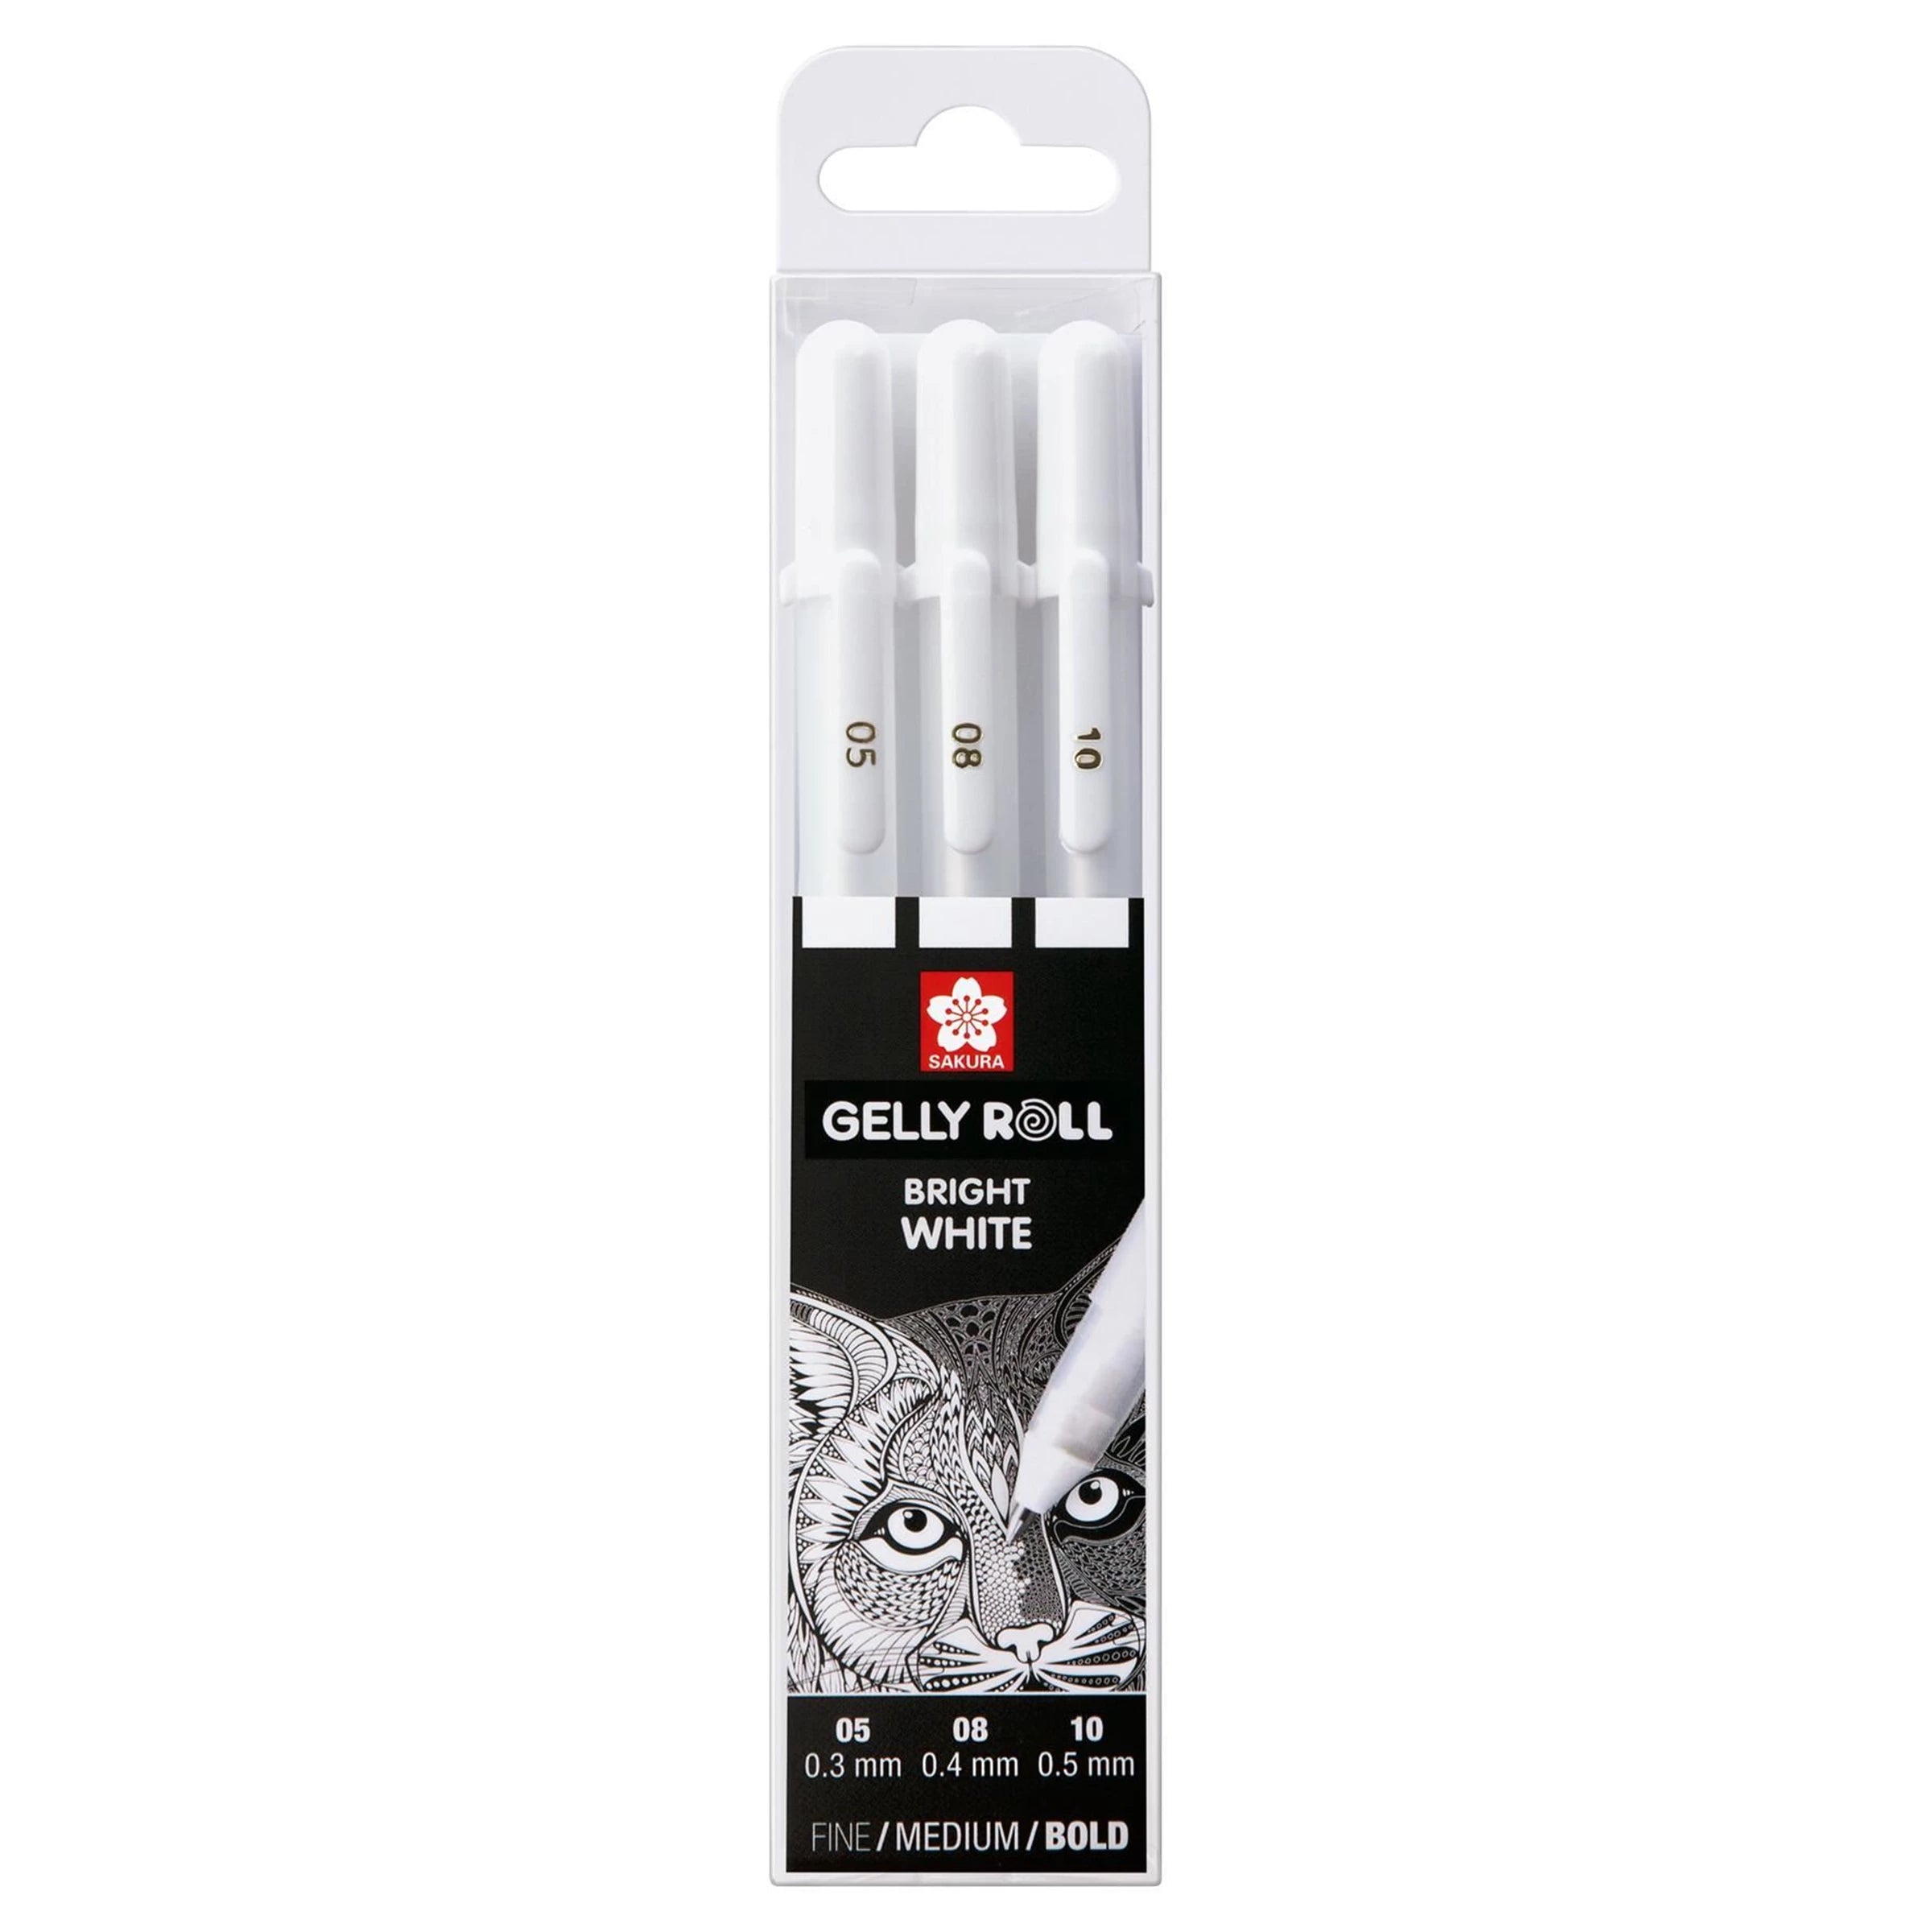 Gelly Roll set Bright White 3 pens Set